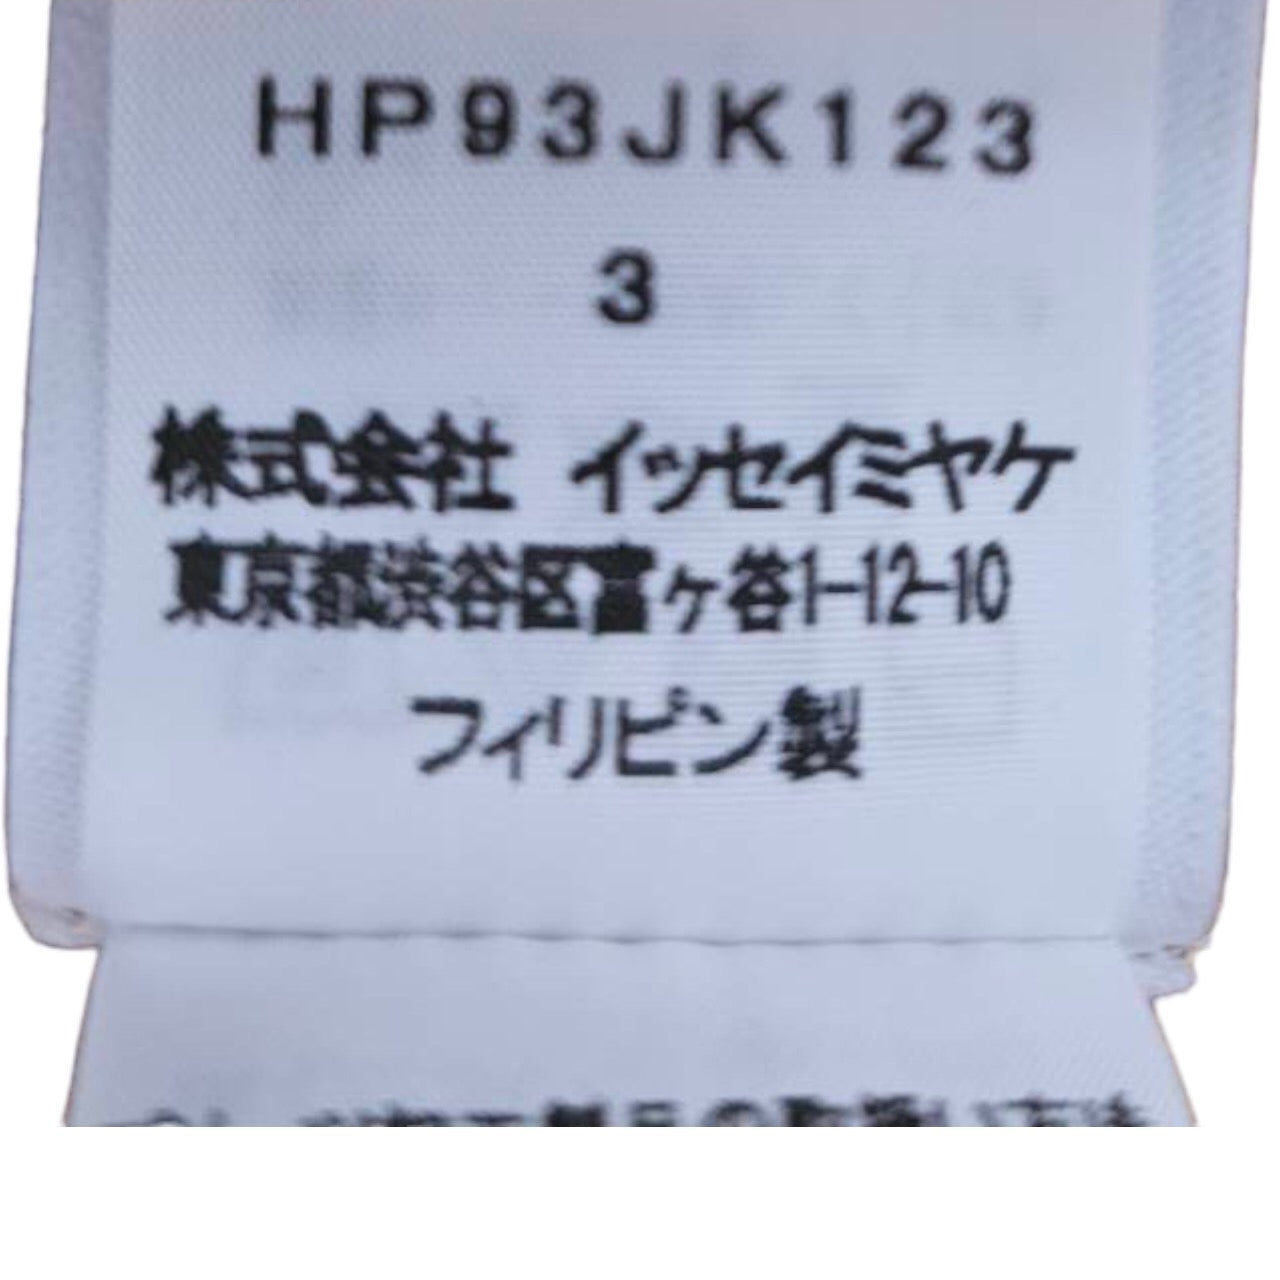 HOMME PLISSE ISSEY MIYAKE(オムプリッセイッセイミヤケ) 19AW high neck pleated  pullover/ハイネックプリーツプルオーバー HP93JK123 SIZE 3(L) オレンジ